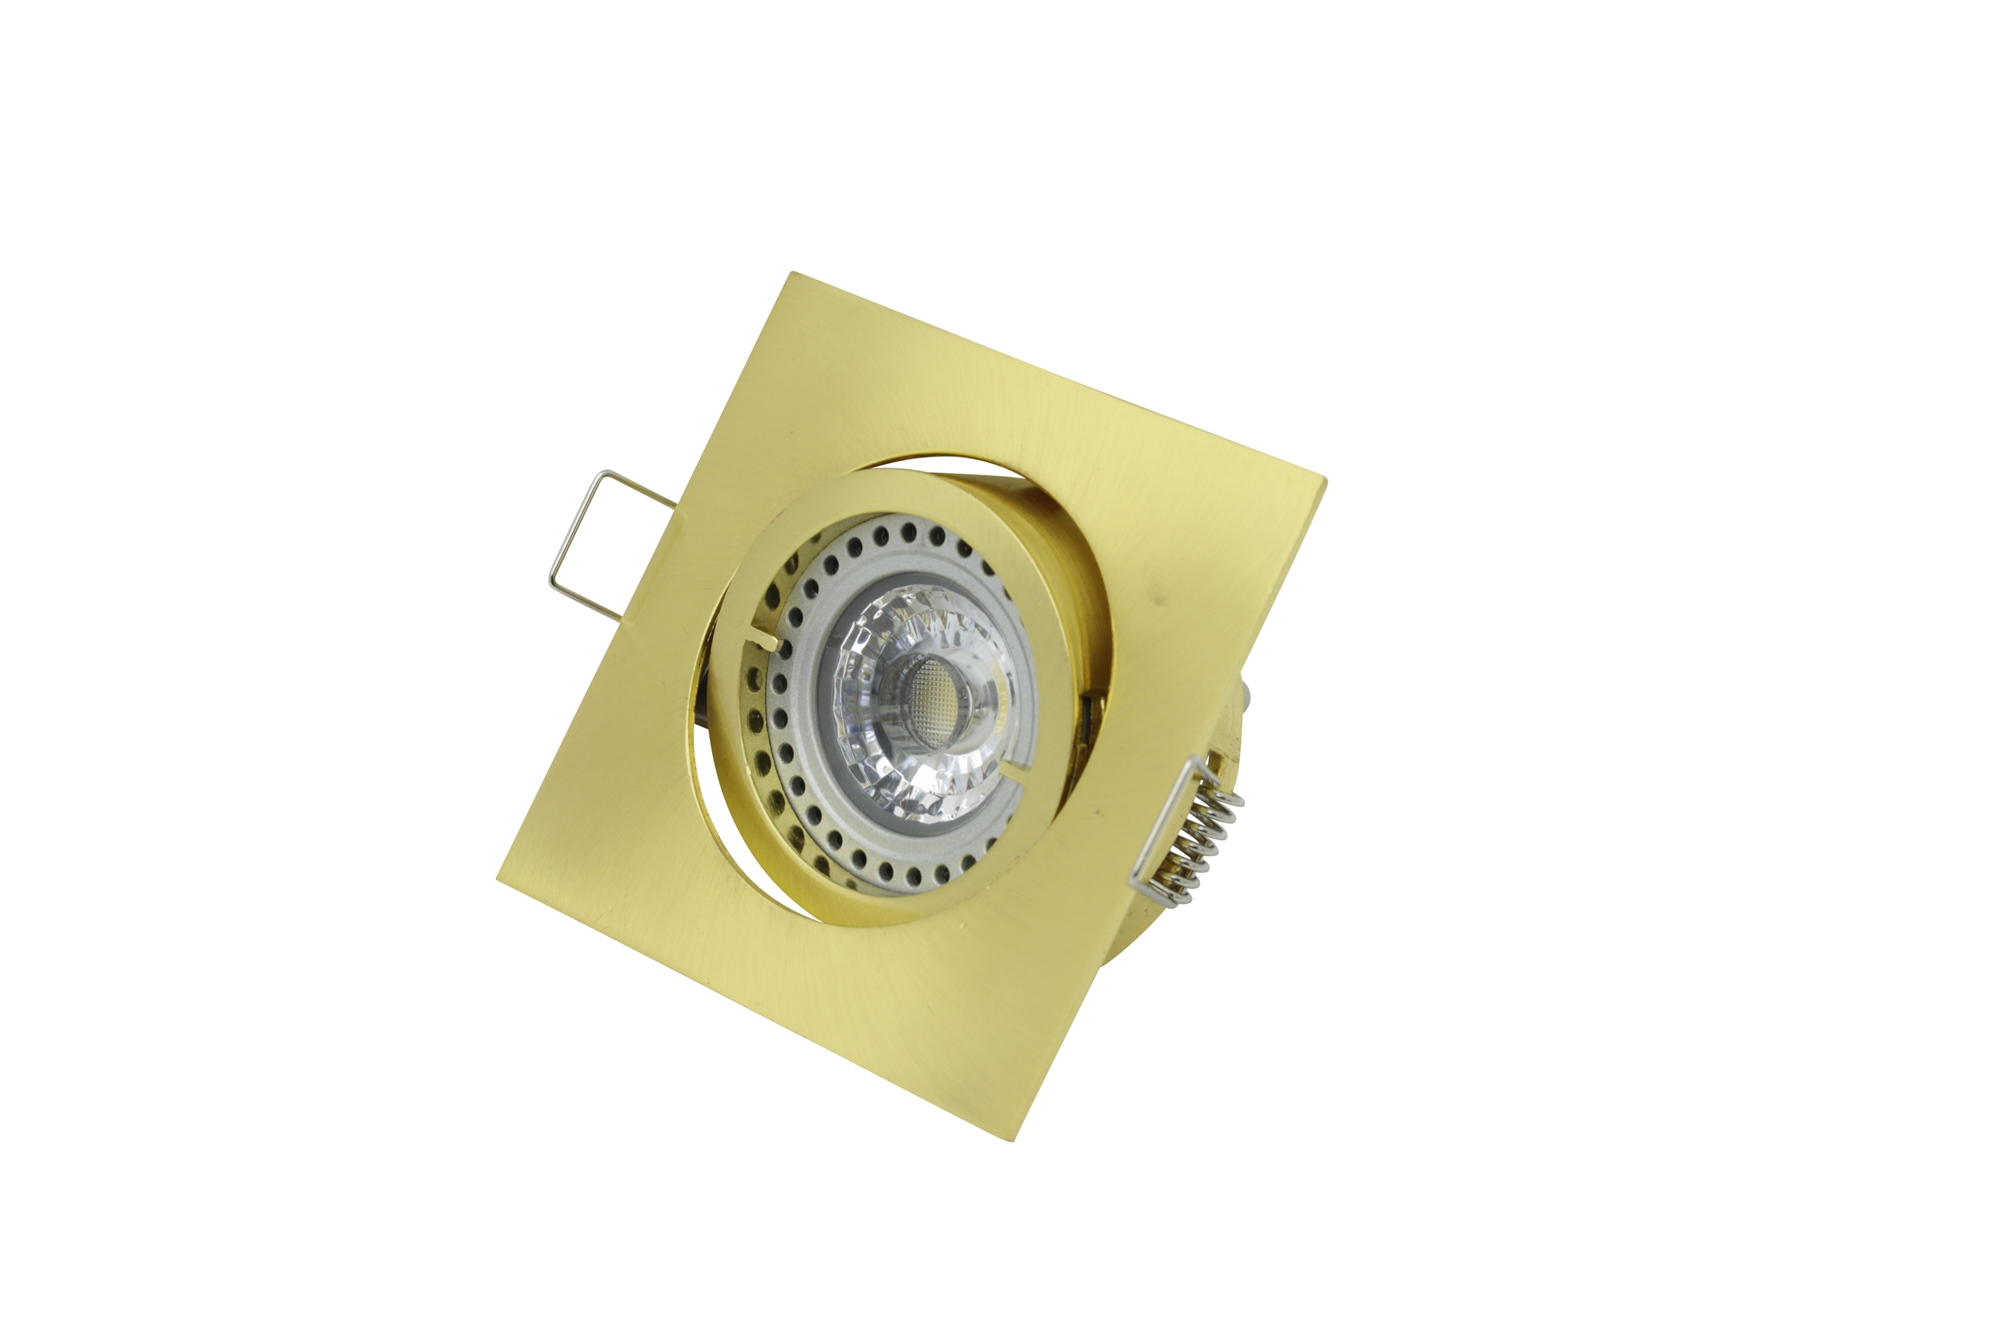 Lampenlux LED-Einbaustrahler Spot Snap eckig gold schwenkbar 8.2x8.2cm 12V MR16 rostfrei Aluminium